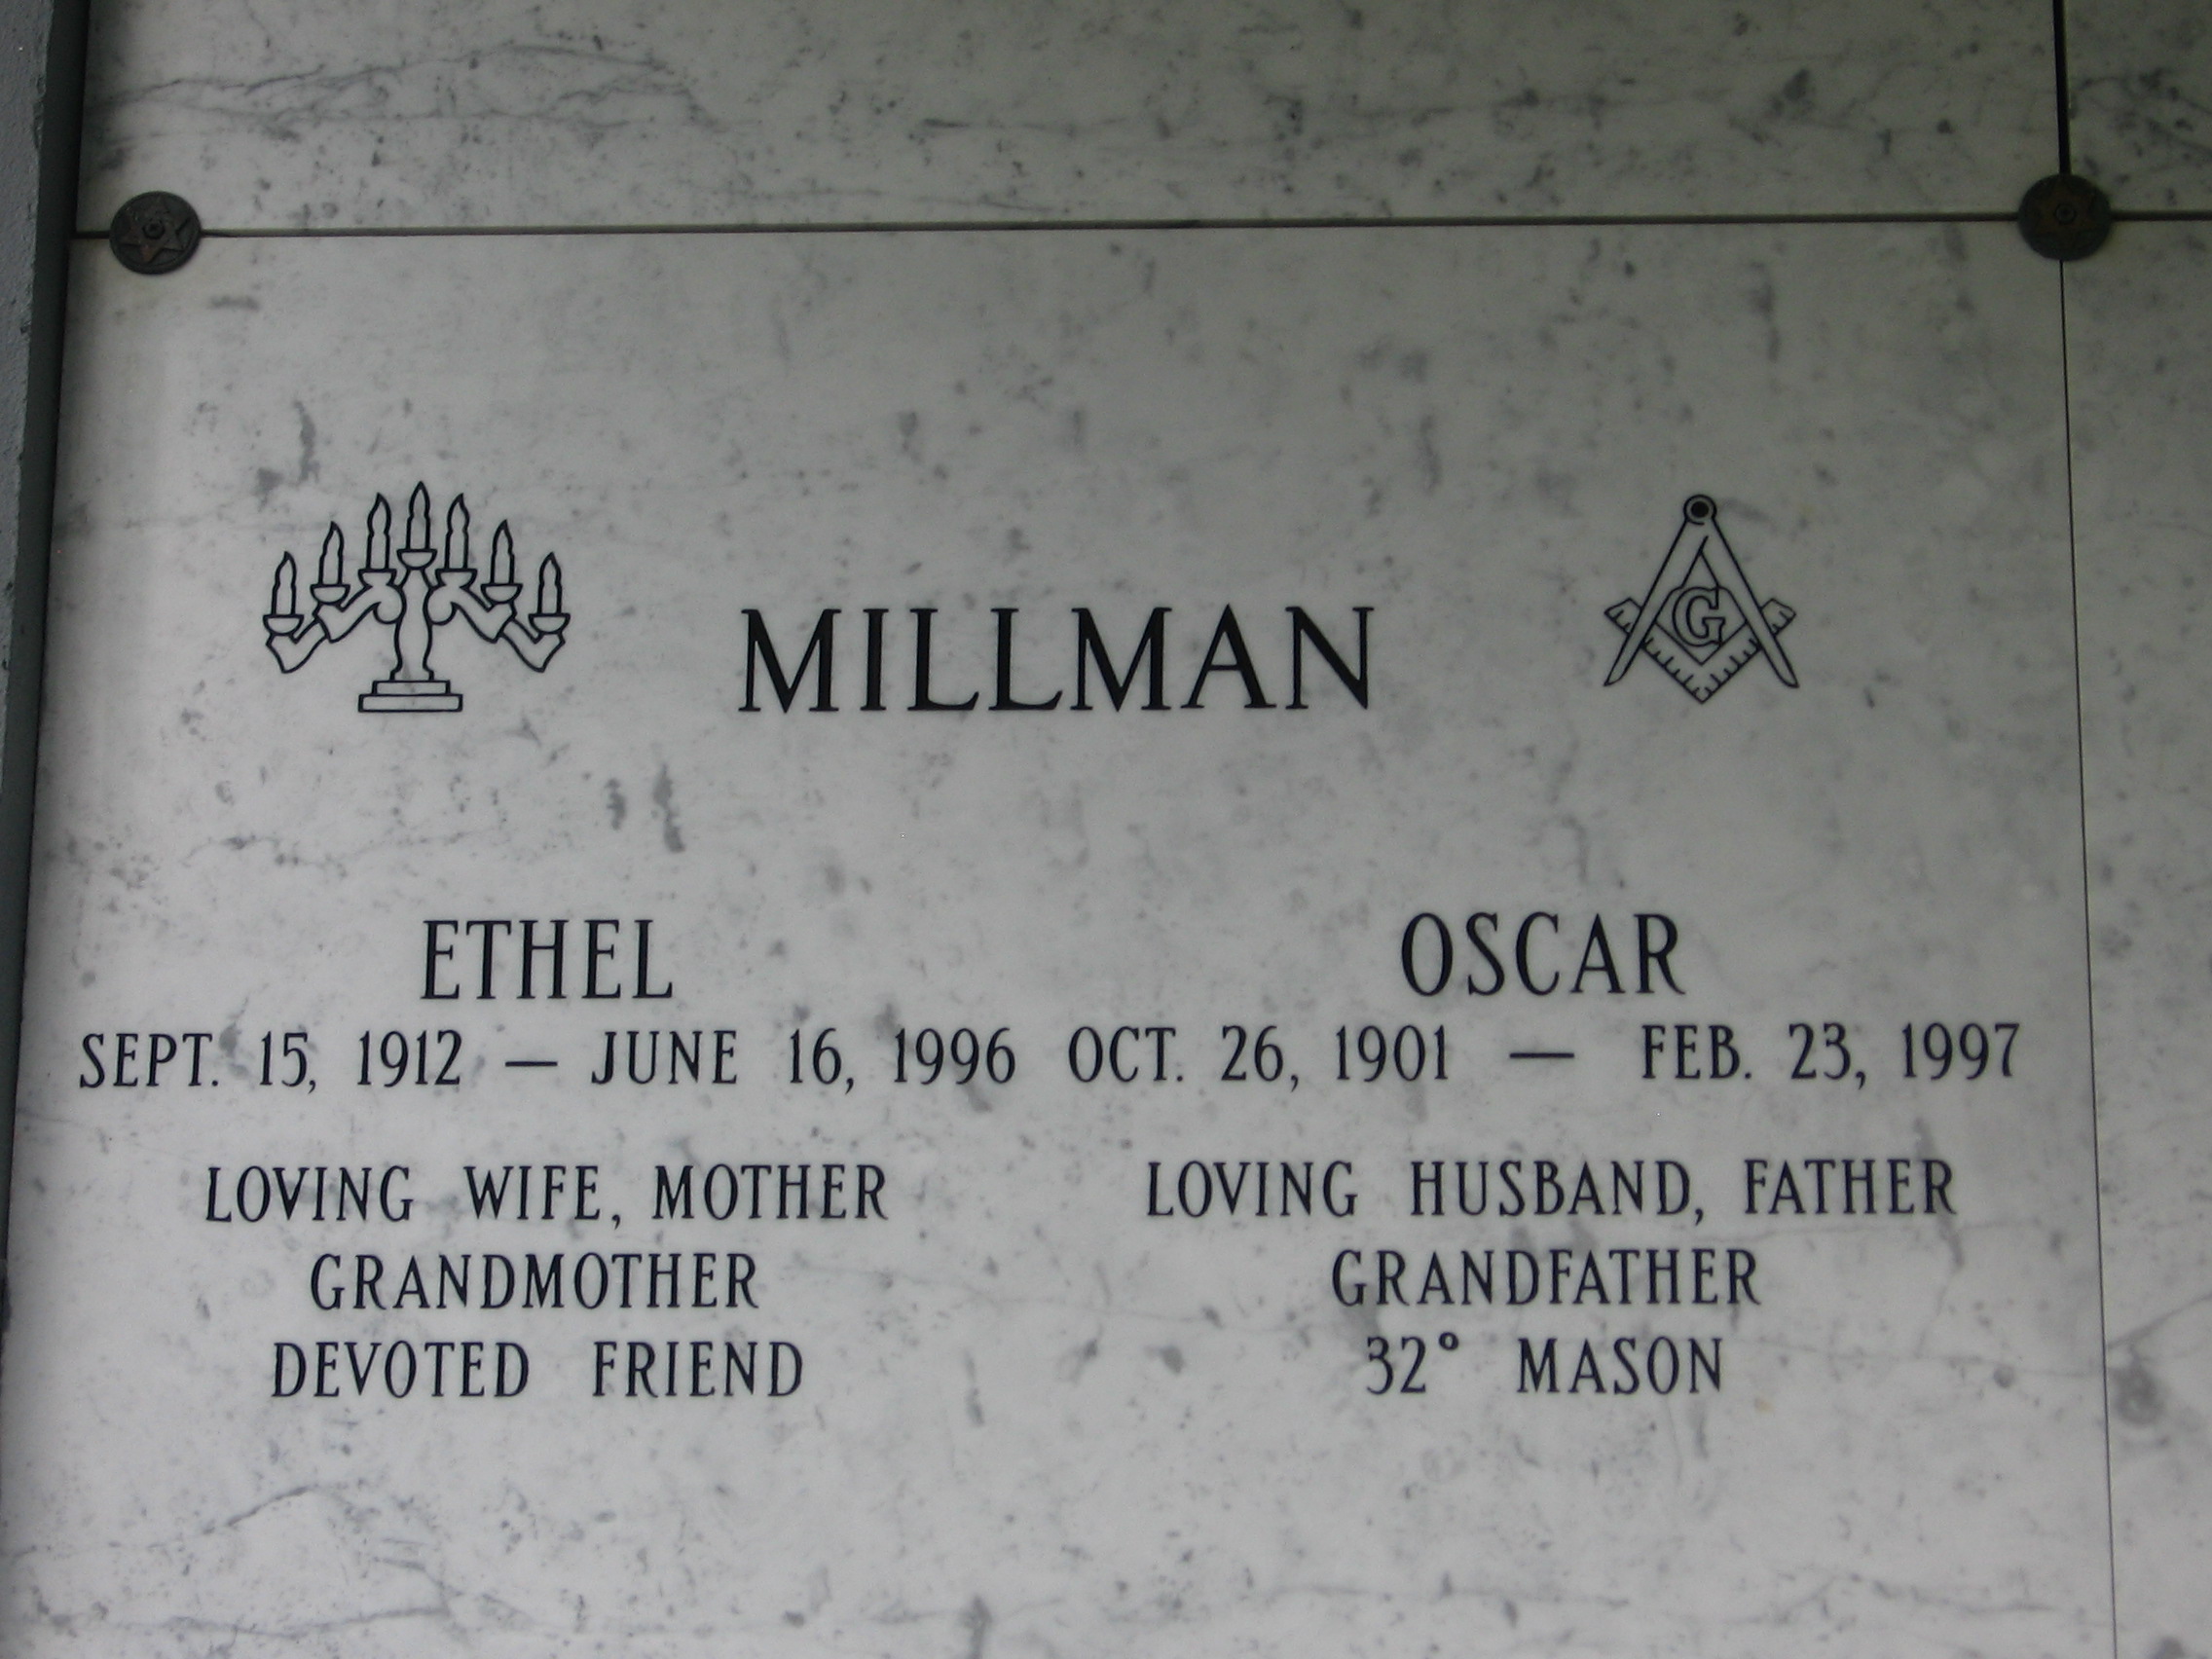 Oscar Millman